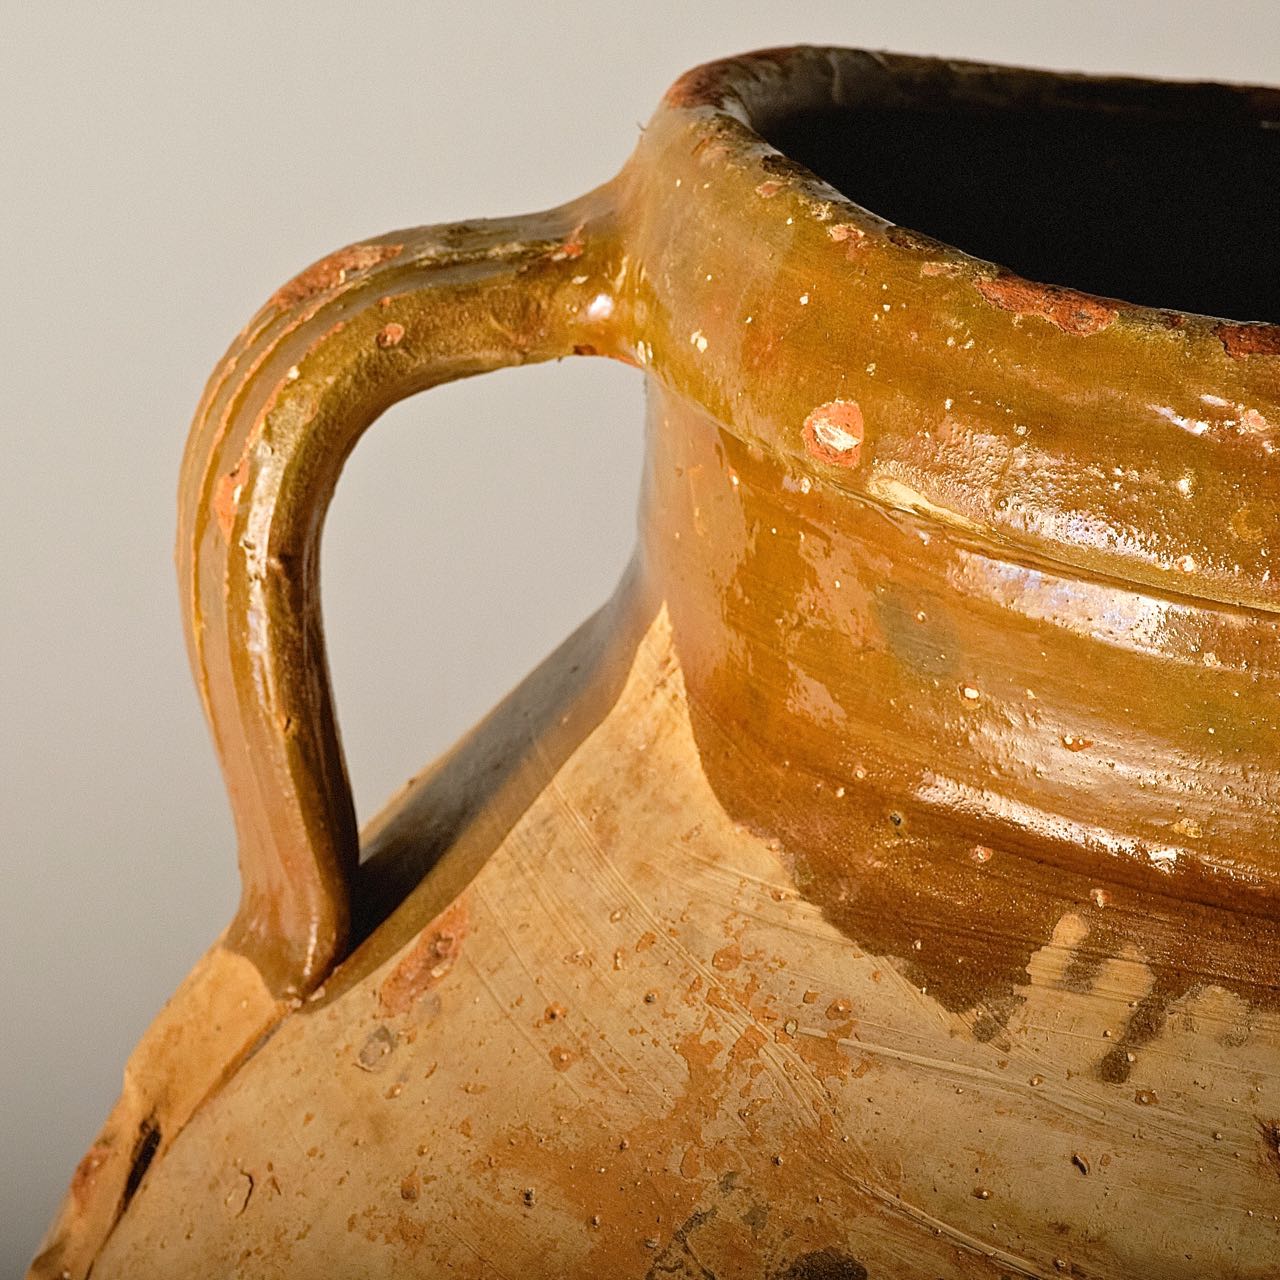 Antique two-handle semi-glazed olive oil jar